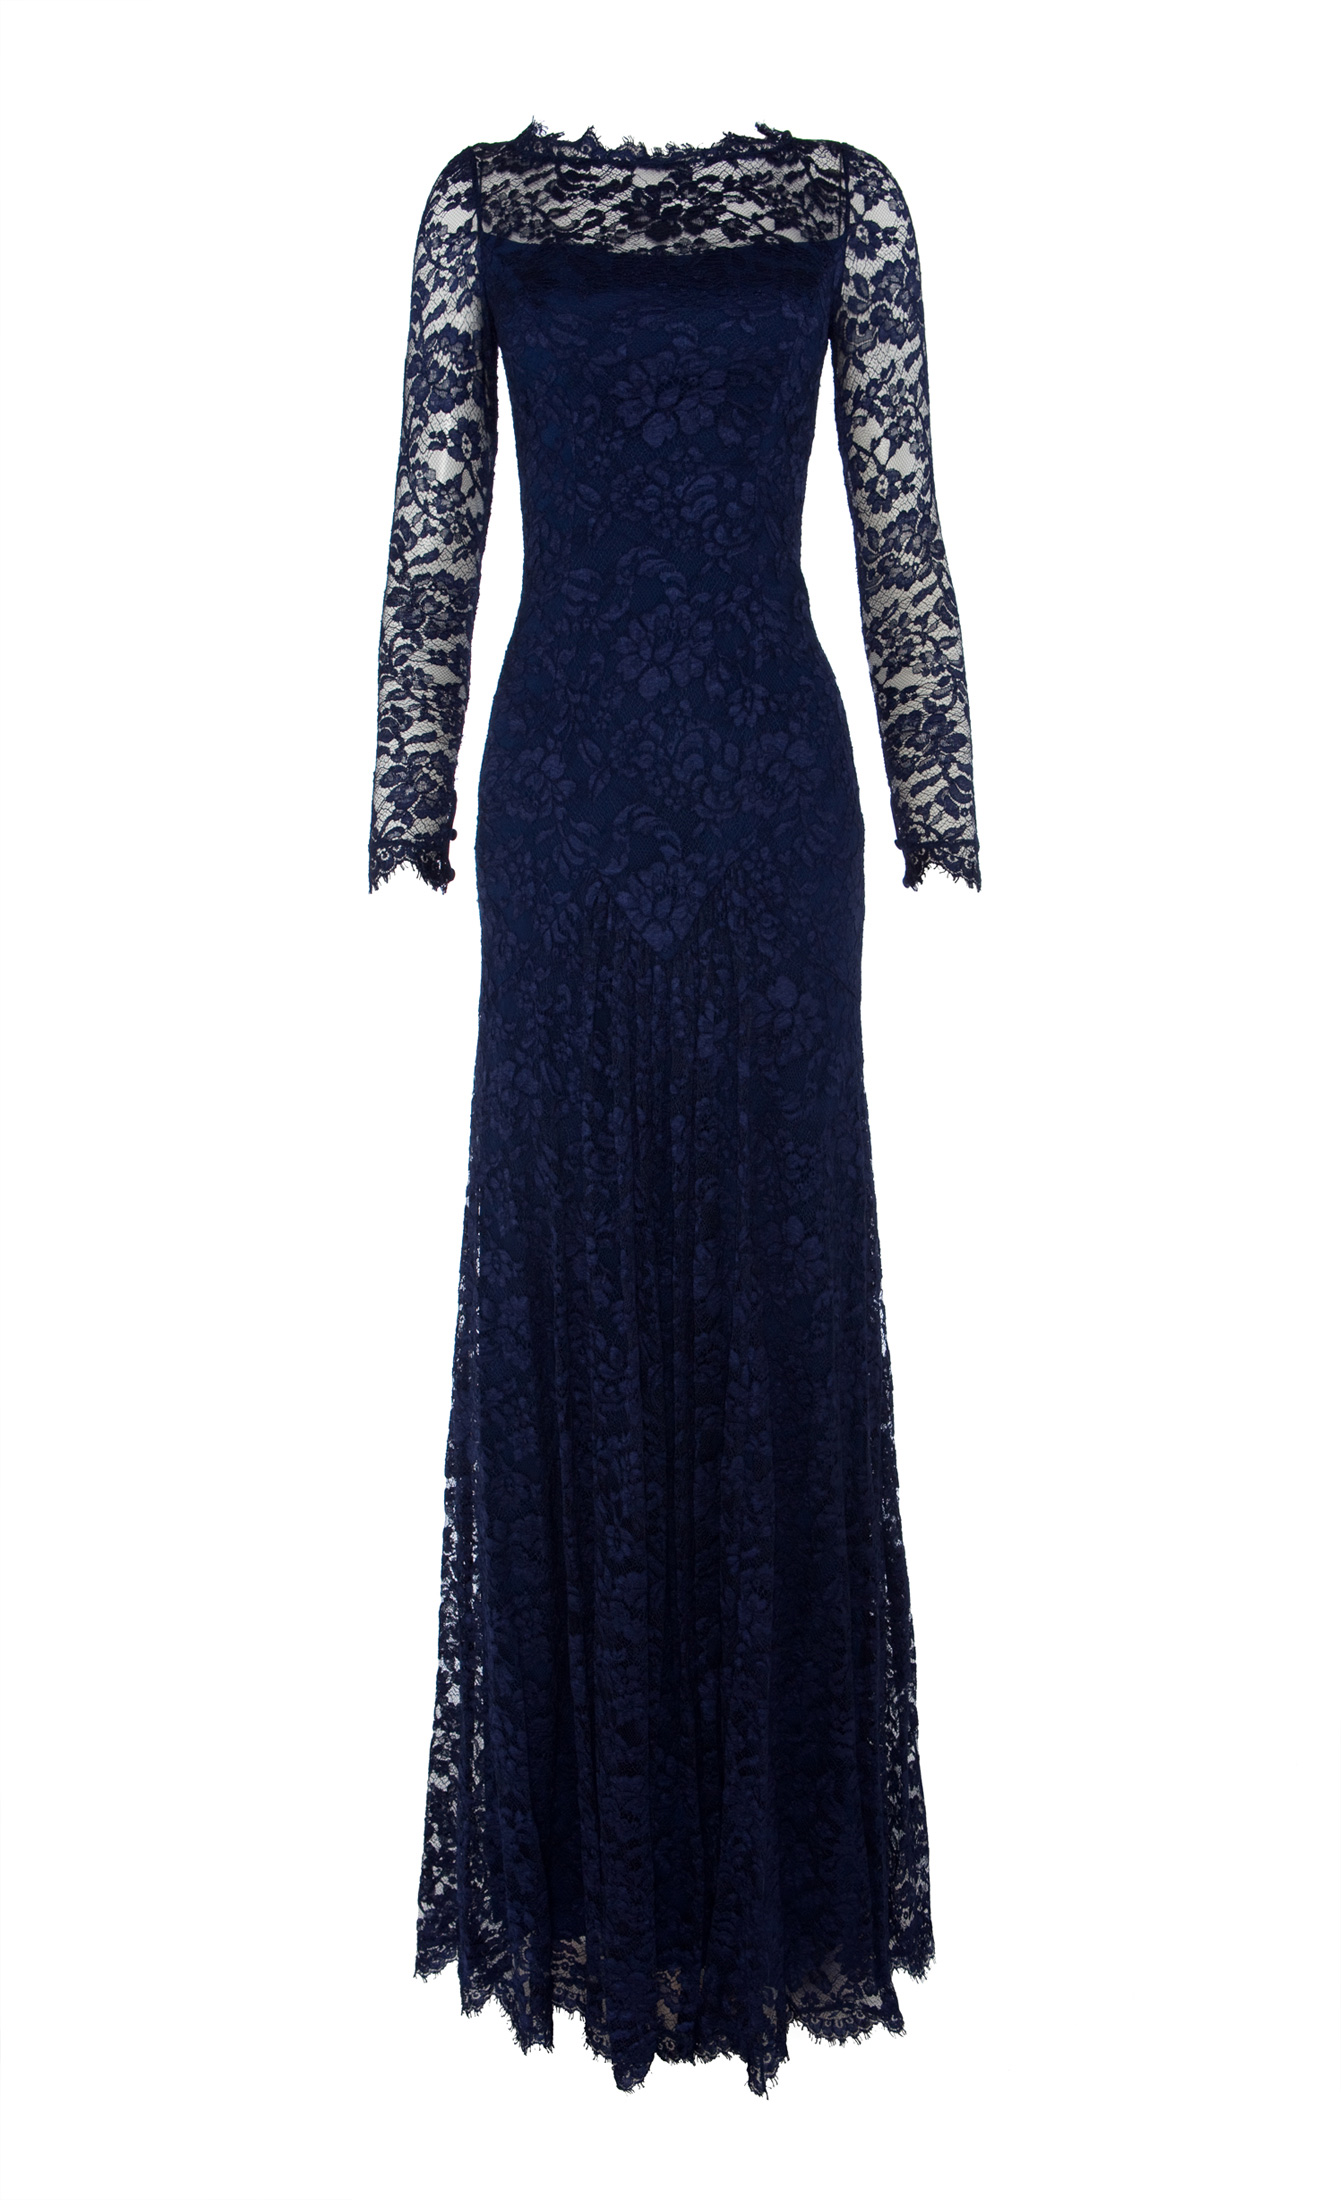 Lyst - Temperley London Long Cleo Lace Dress in Blue